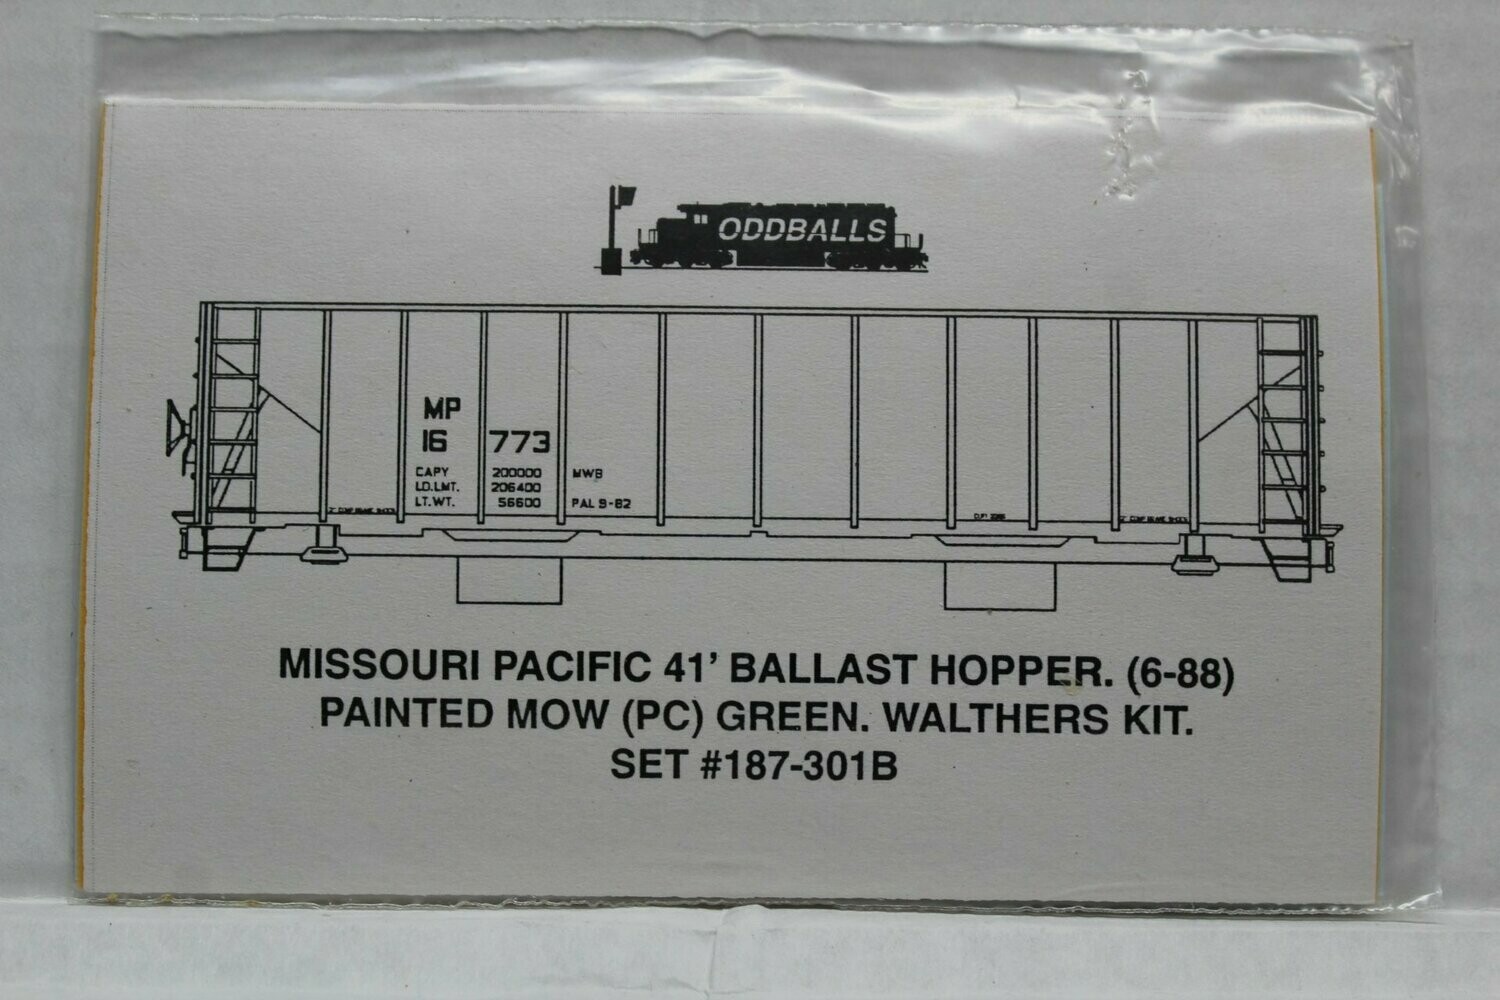 Missouri Pacific 41' Ballast Hopper BlacK Decal set ODDBALLS